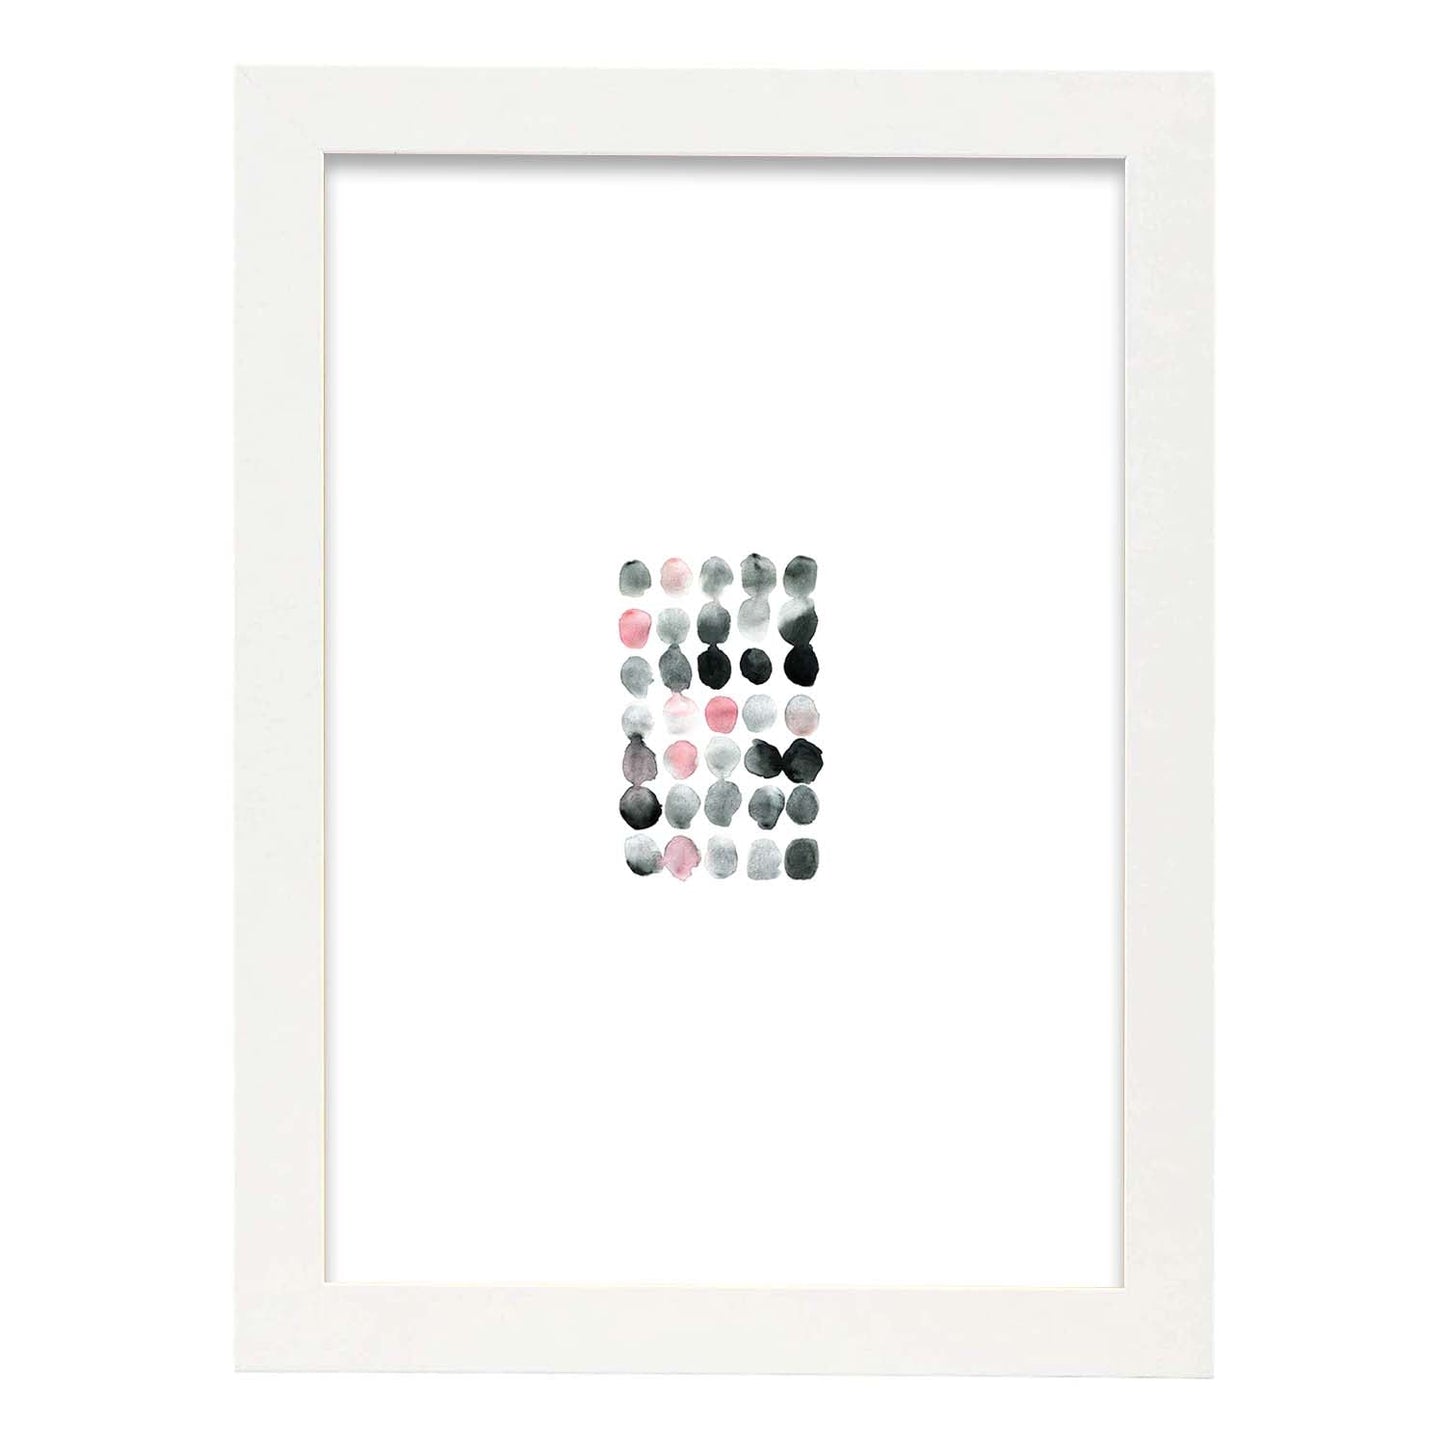 Poster de Abstracto rosa negro circulos. Lámina colorida con diseño nórdico.-Artwork-Nacnic-A4-Marco Blanco-Nacnic Estudio SL